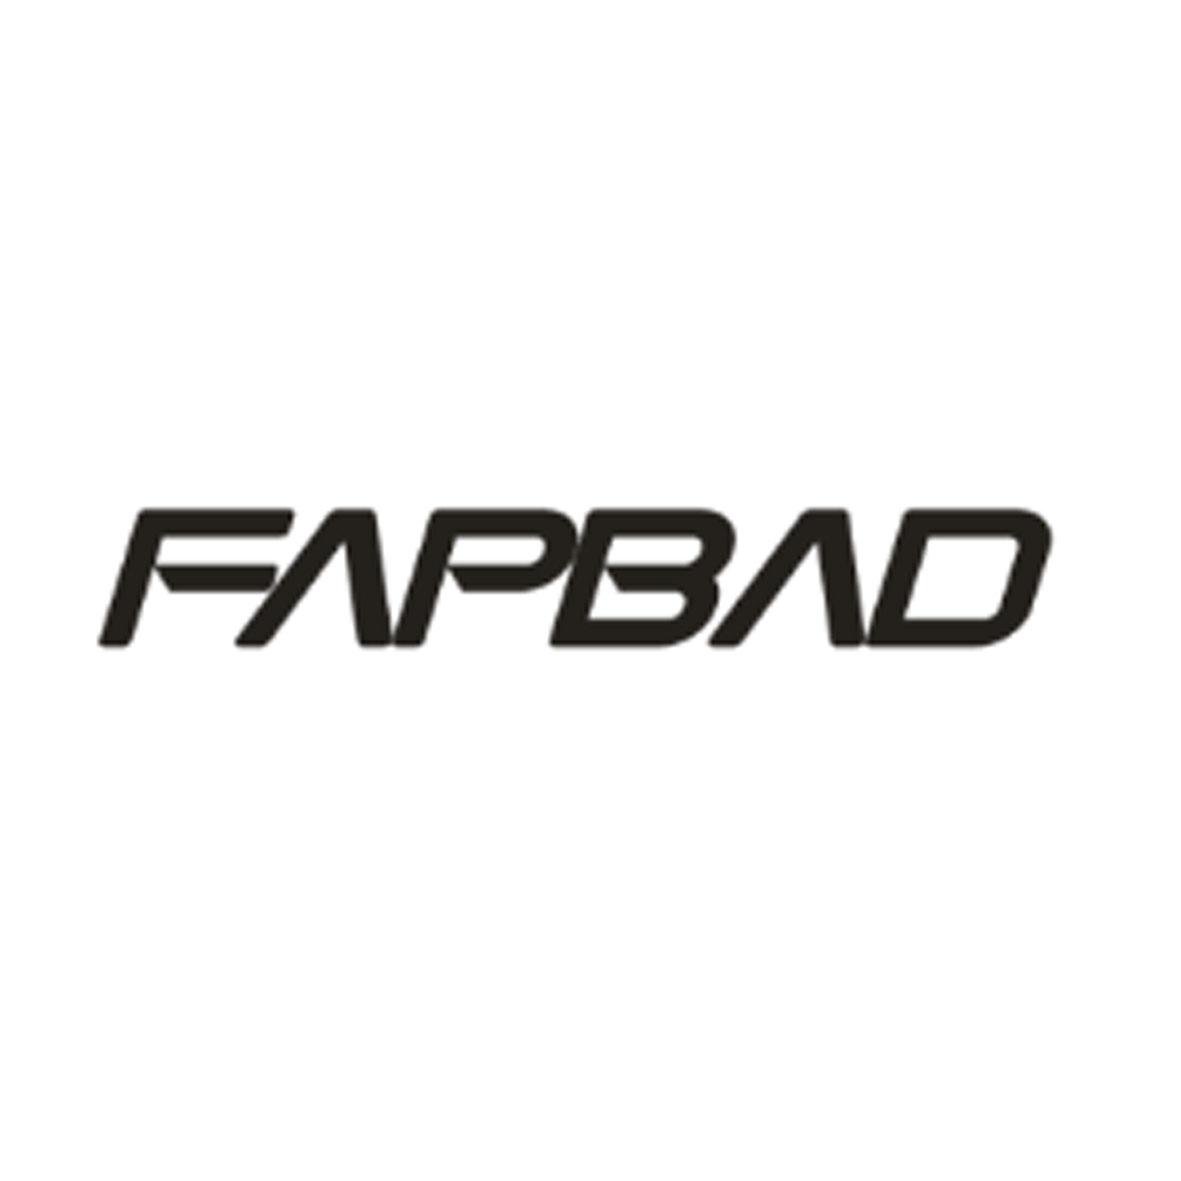 FAPBAD商标转让